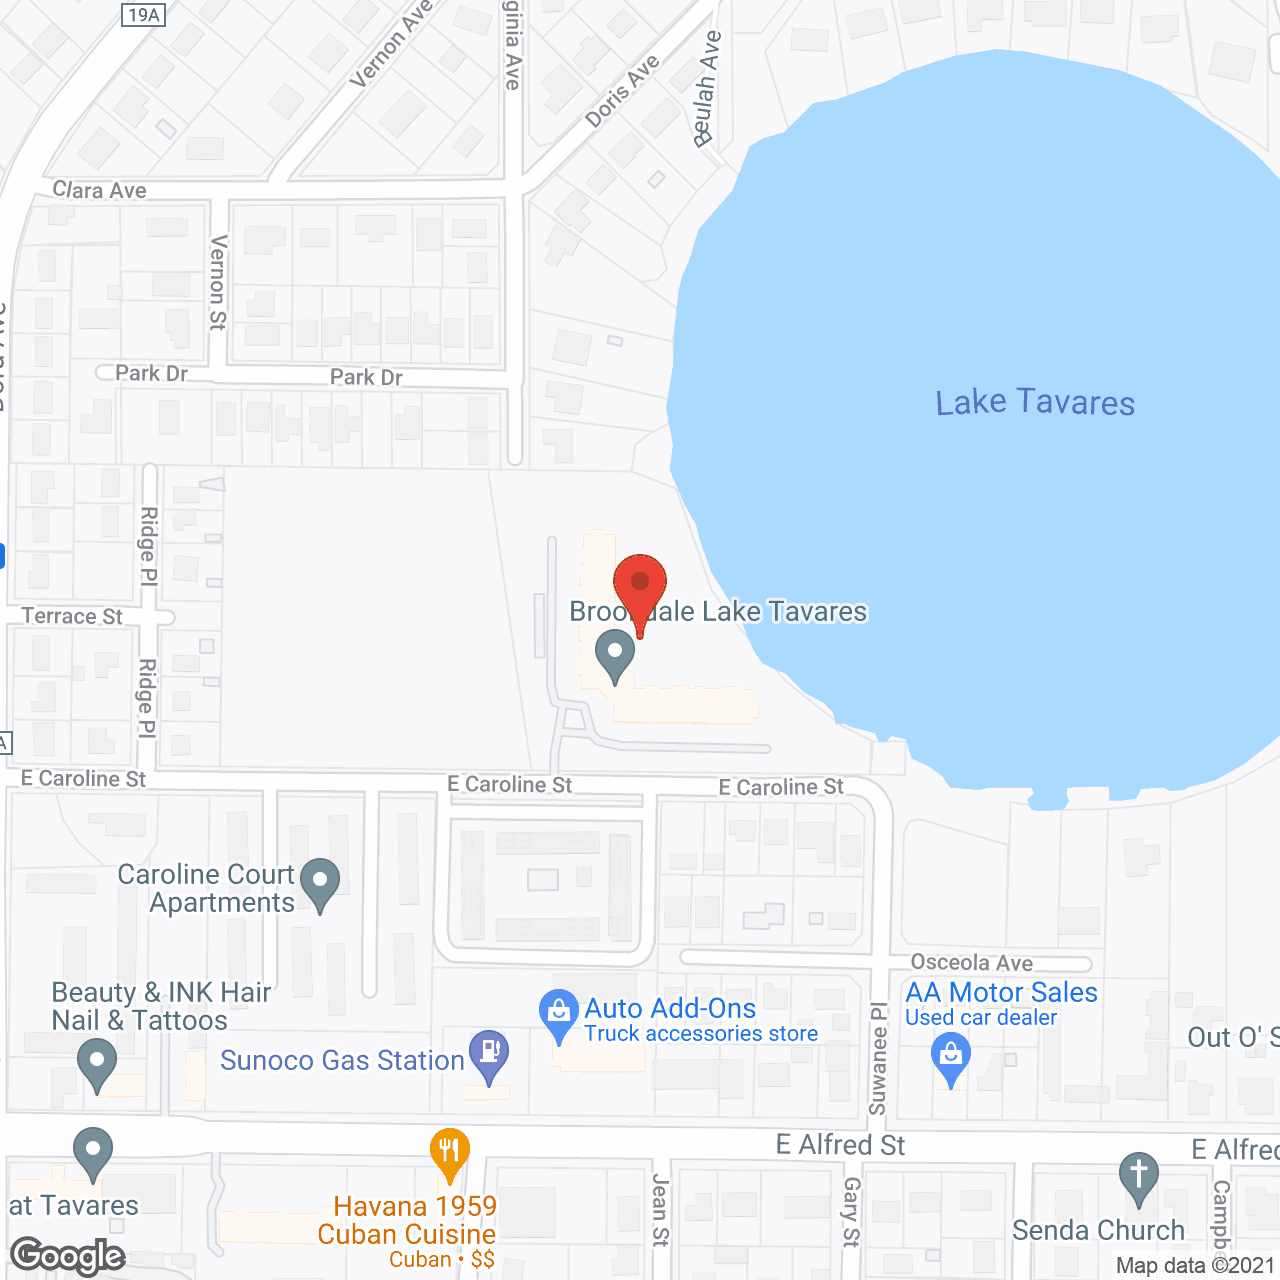 Brookdale Lake Tavares in google map